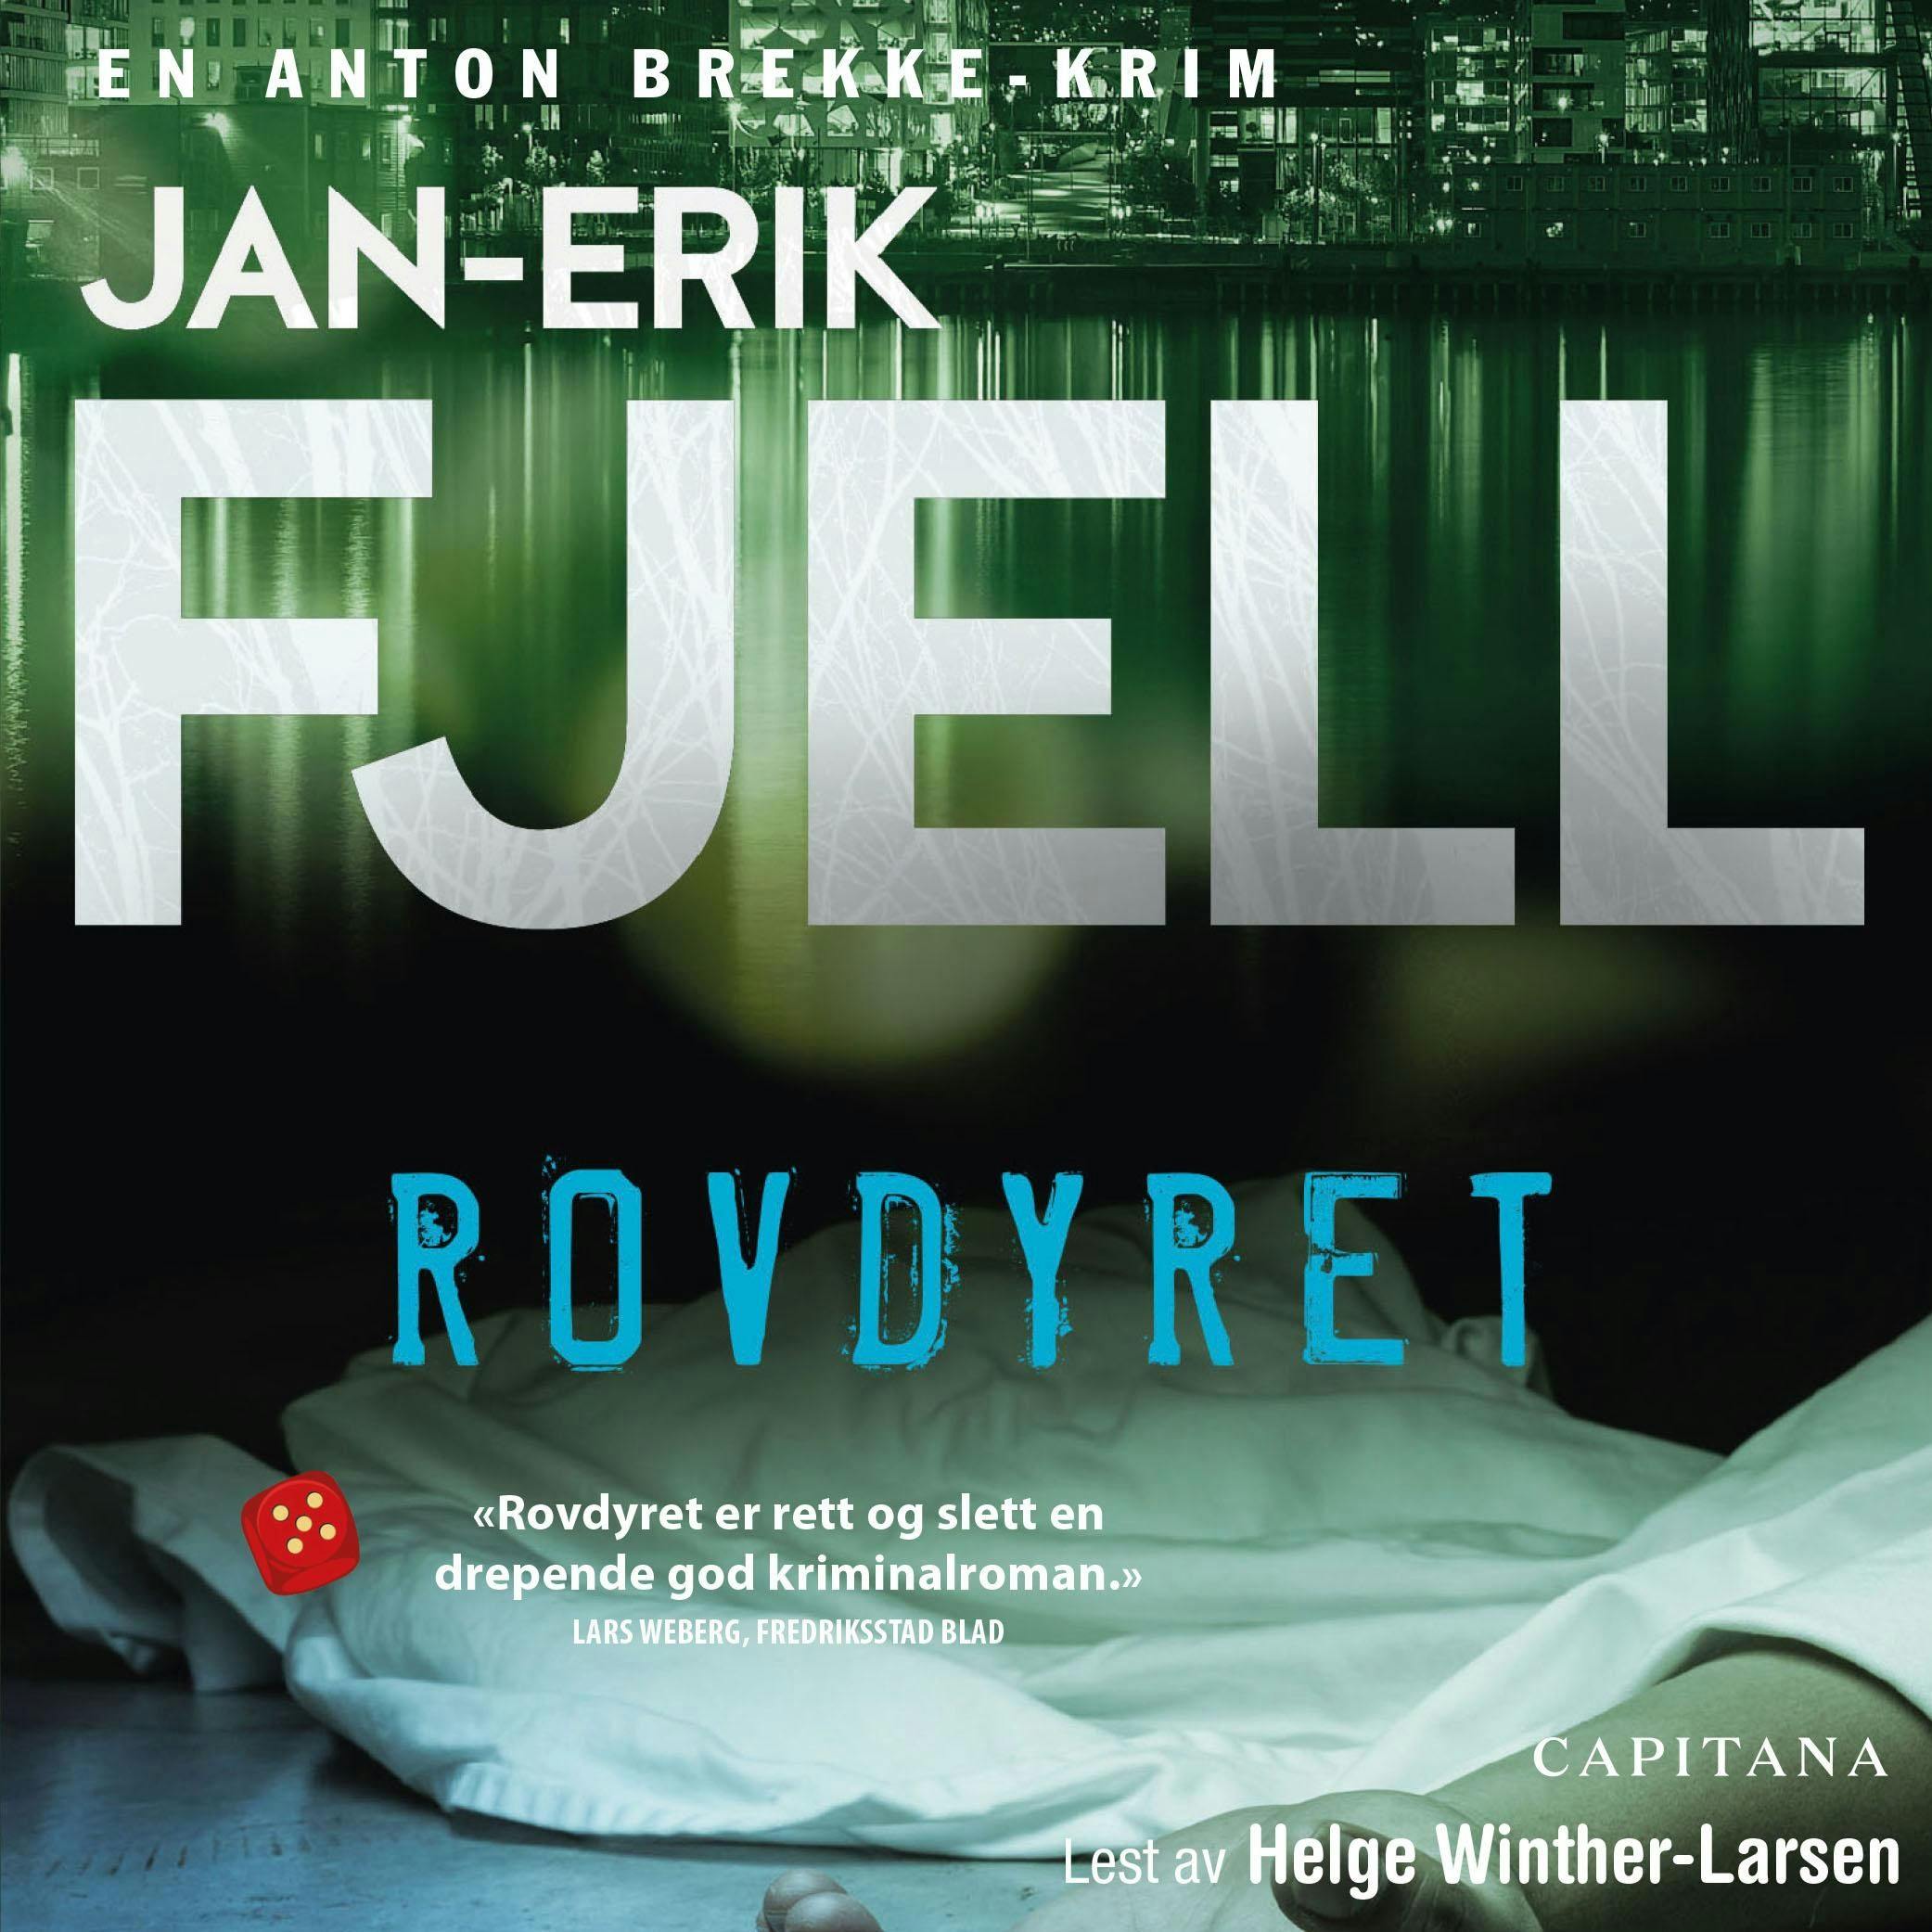 Rovdyret - Jan-Erik Fjell